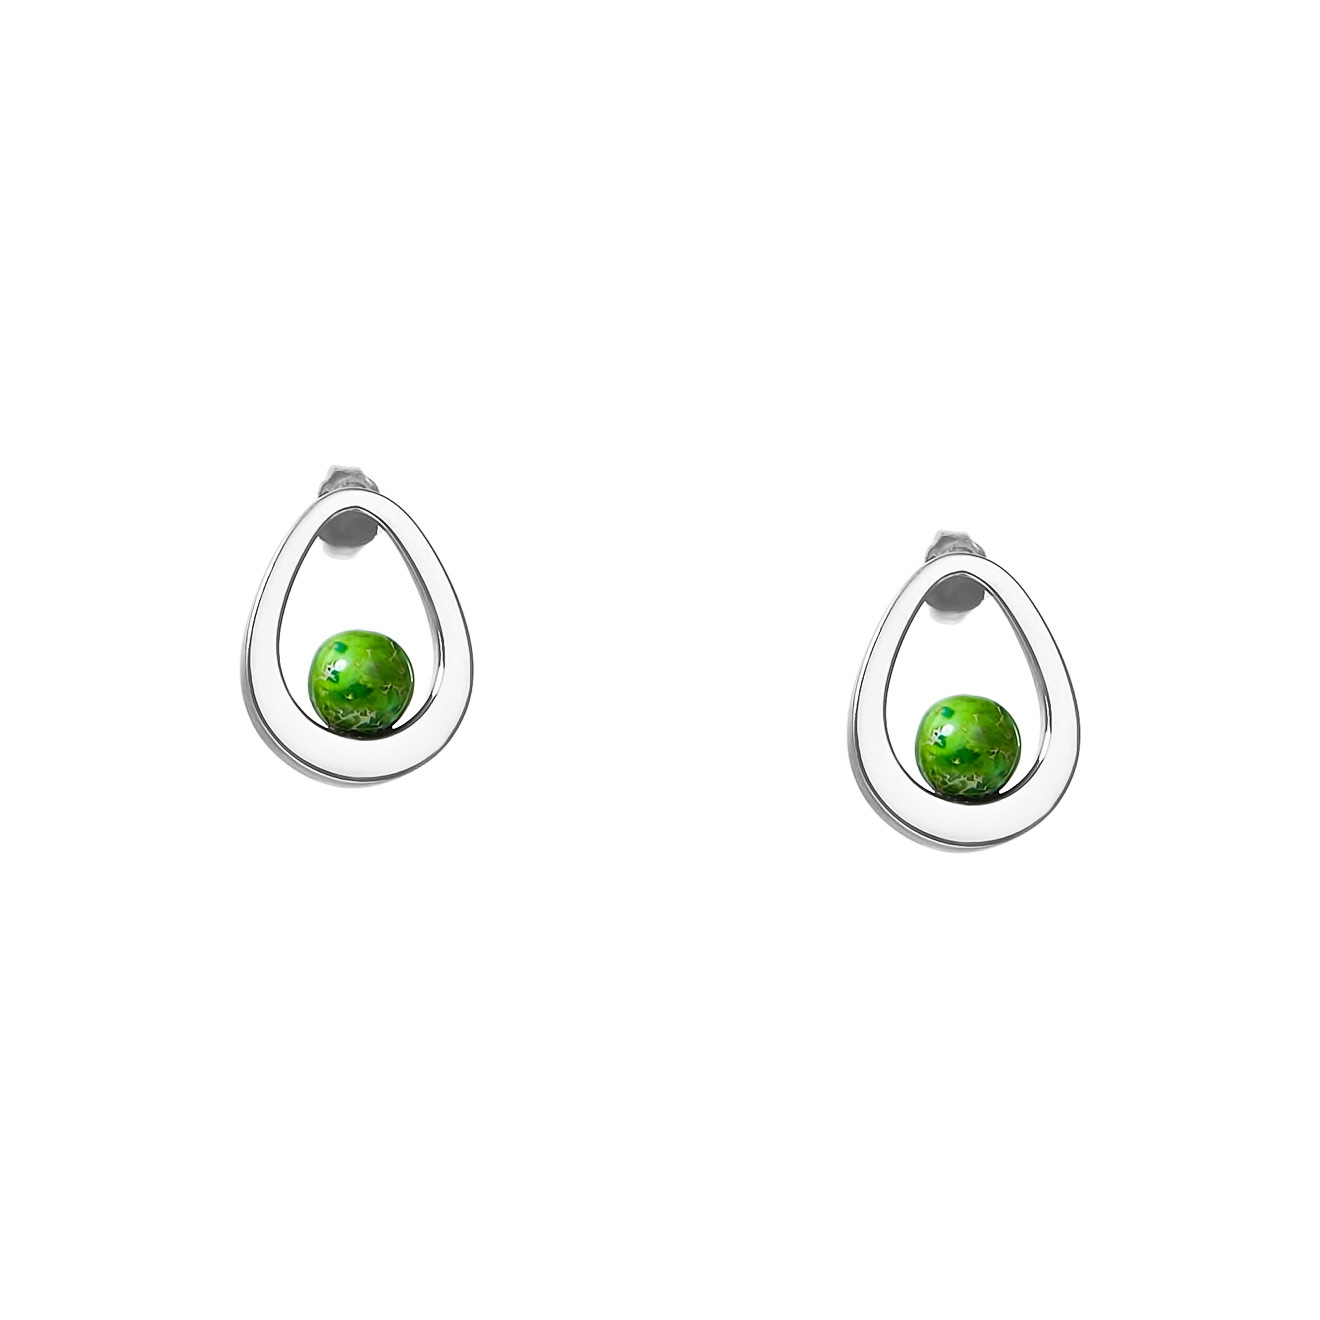 Maximilian Silver Label Малые серьги из серебра «Авокадо» с зелёным варисцитом maximilian silver label кольцо из серебра авокадо с зеленым варисцитом